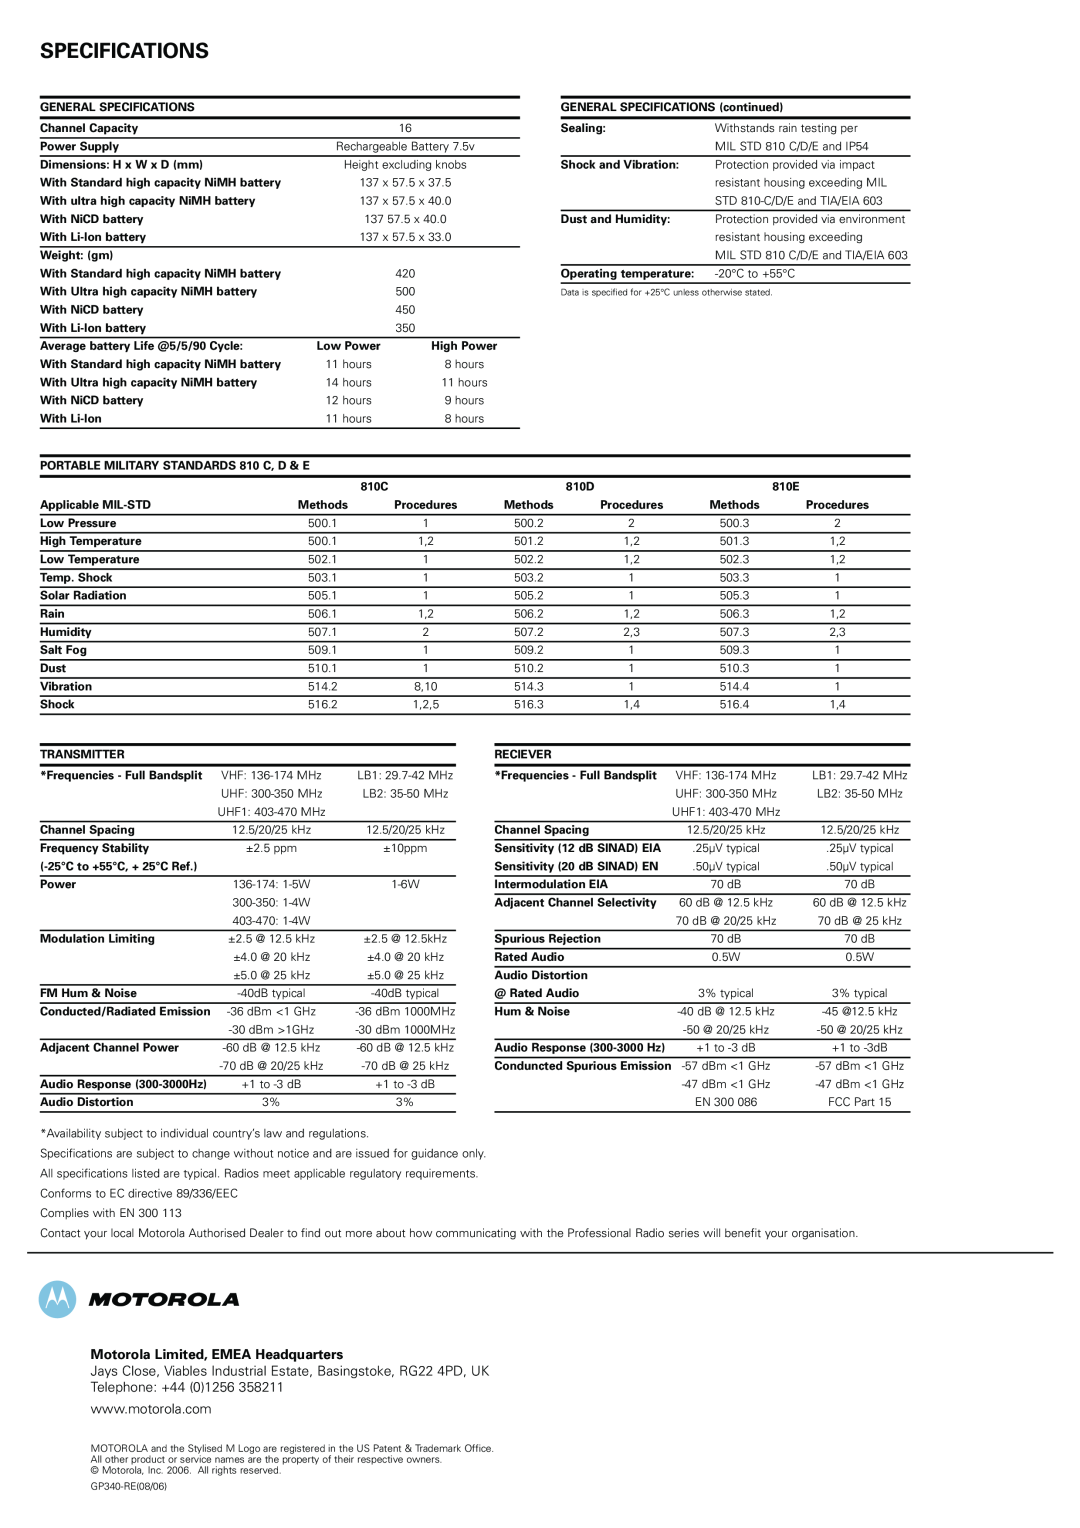 Motorola GP340 specifications Specifications, Motorola Limited, EMEA Headquarters 